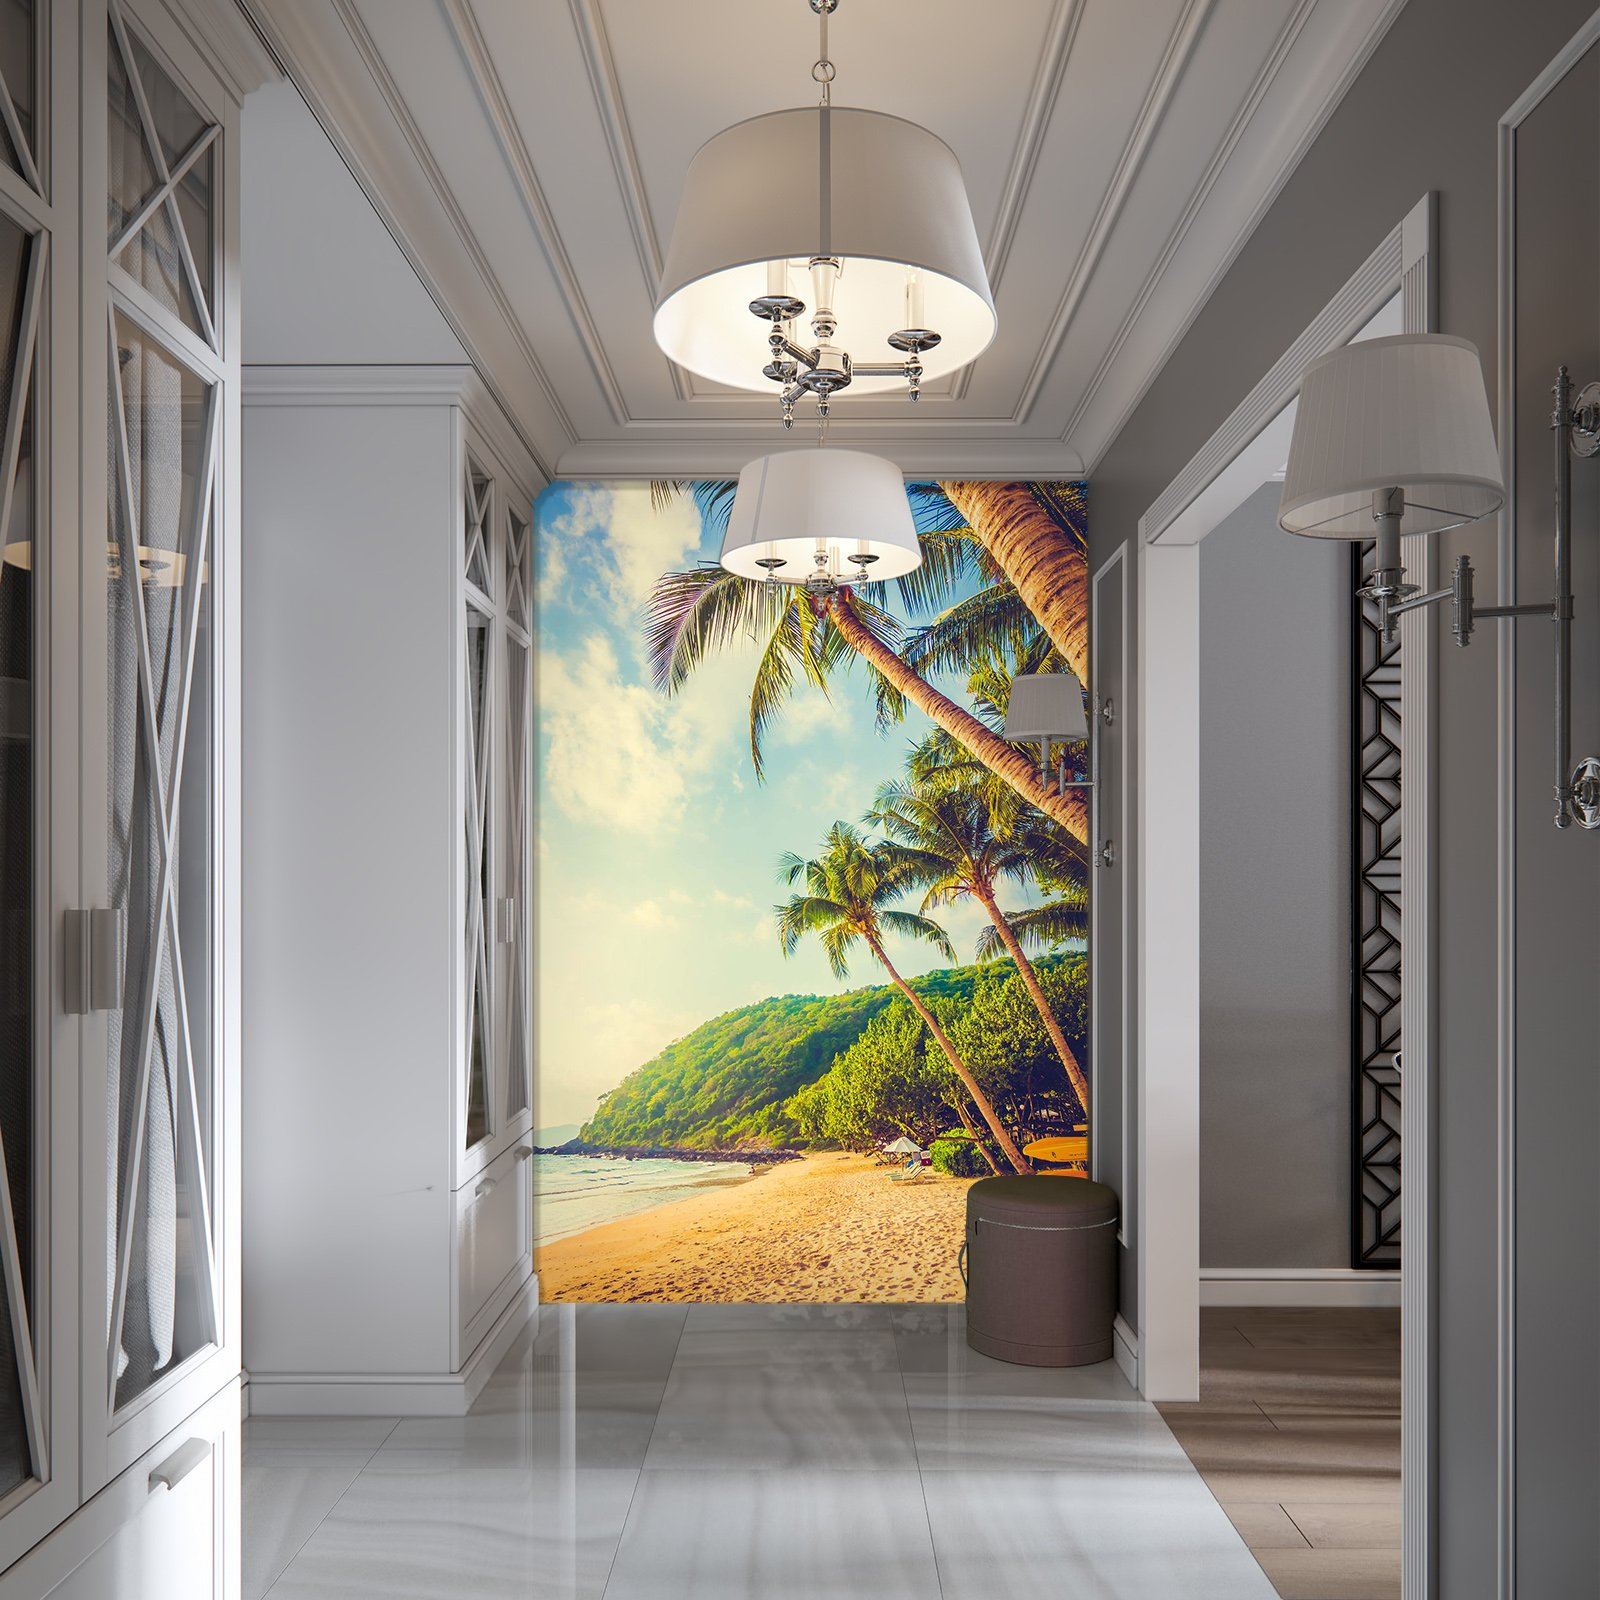 3D Beach Coconut Tree 109 Wall Murals Wallpaper AJ Wallpaper 2 